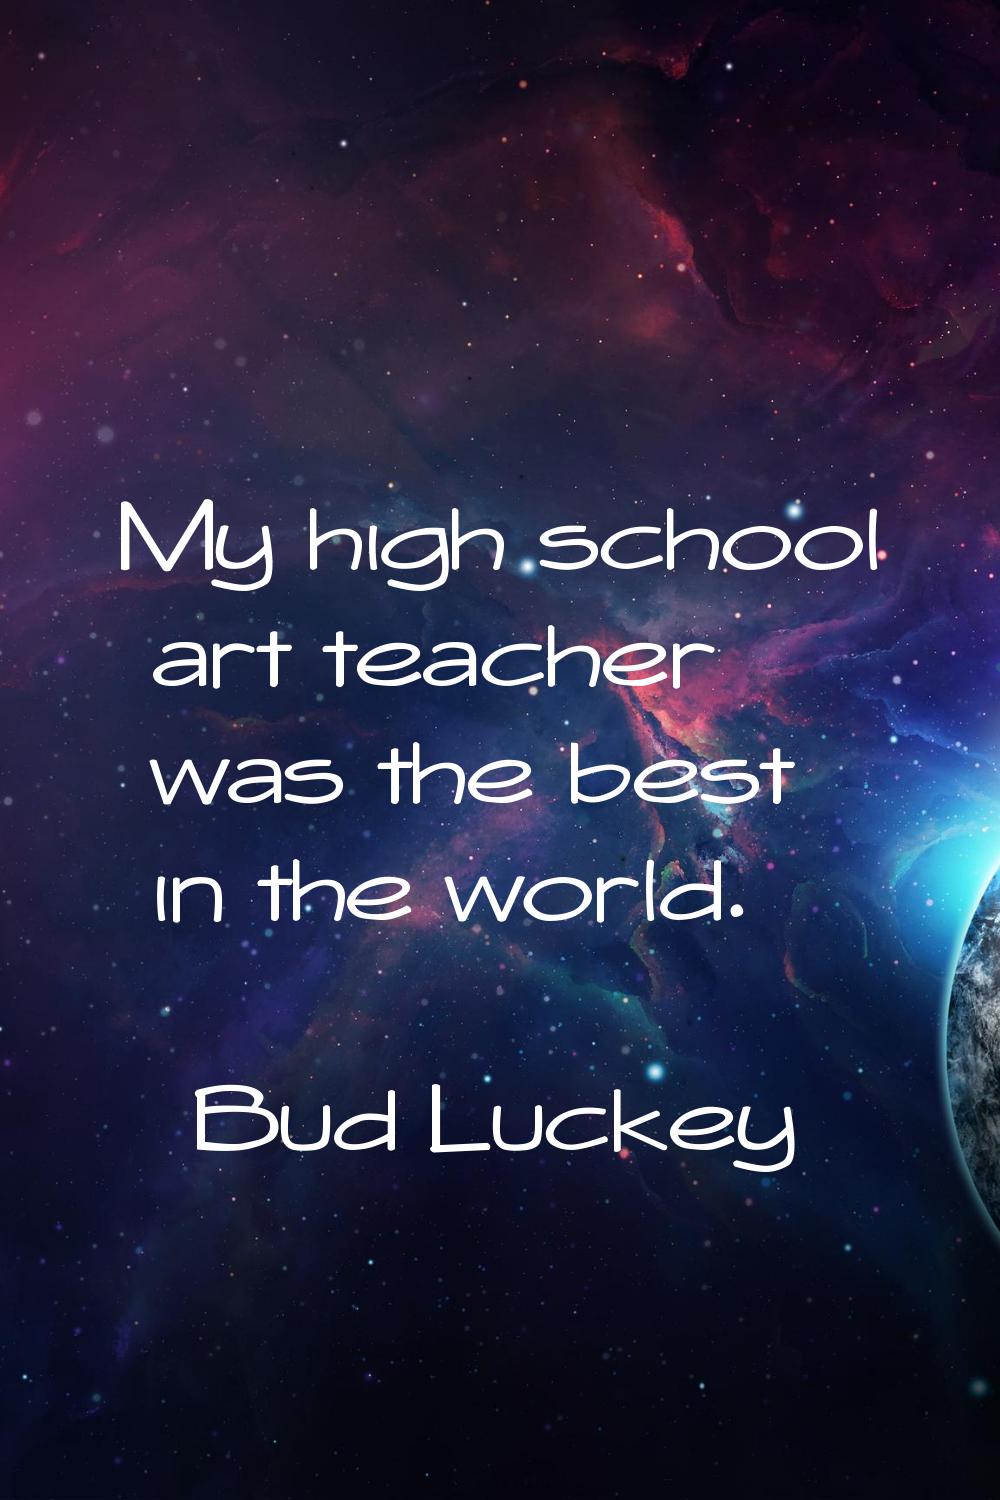 My high school art teacher was the best in the world.